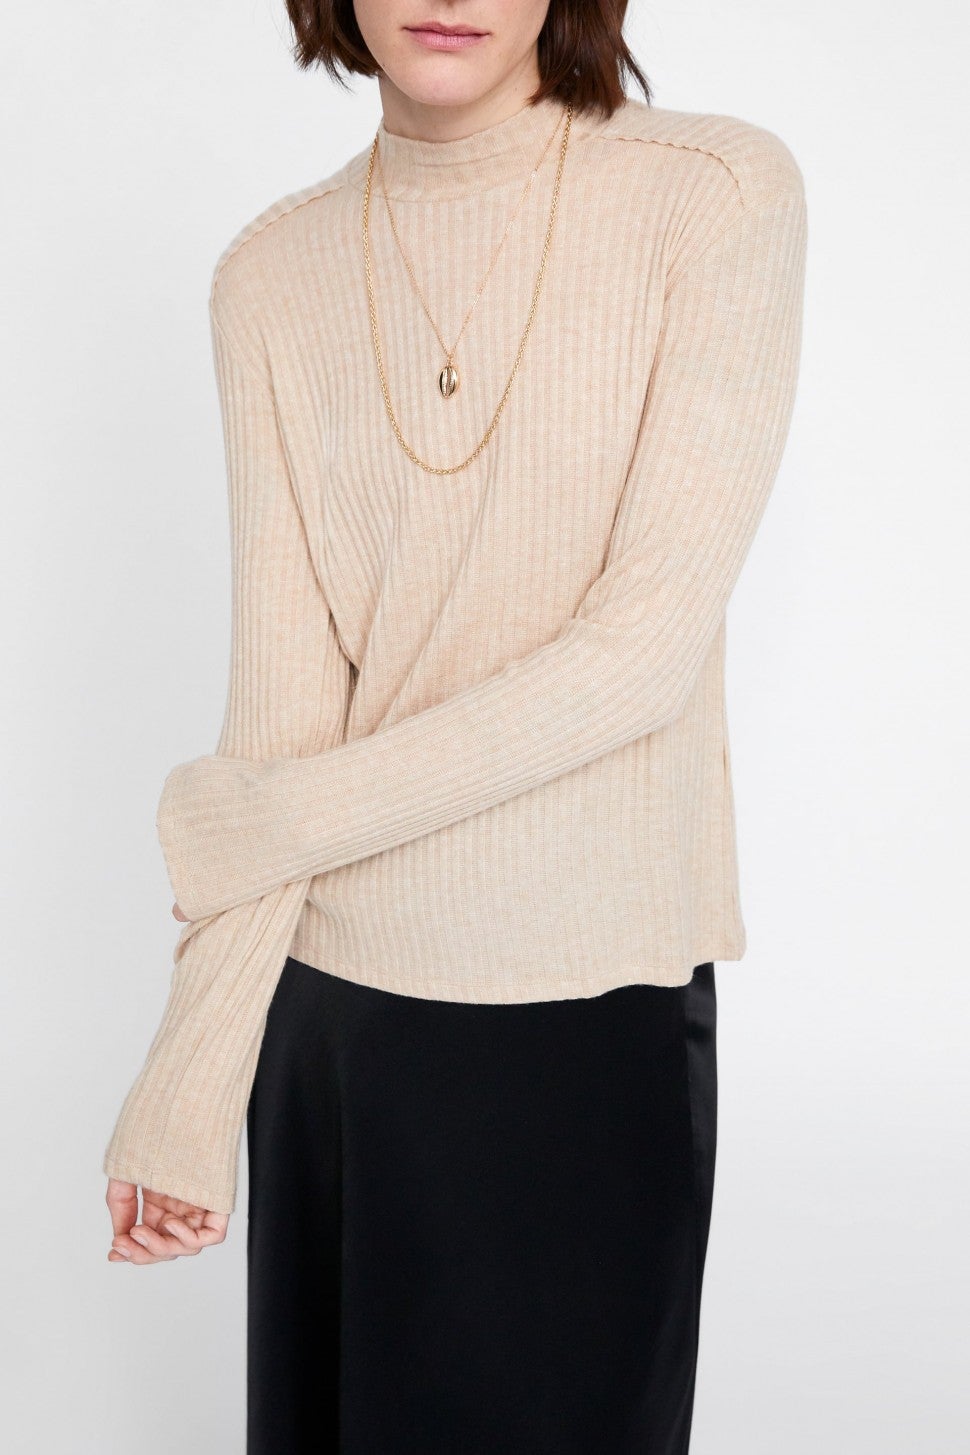 Zara ribbed beige sweater